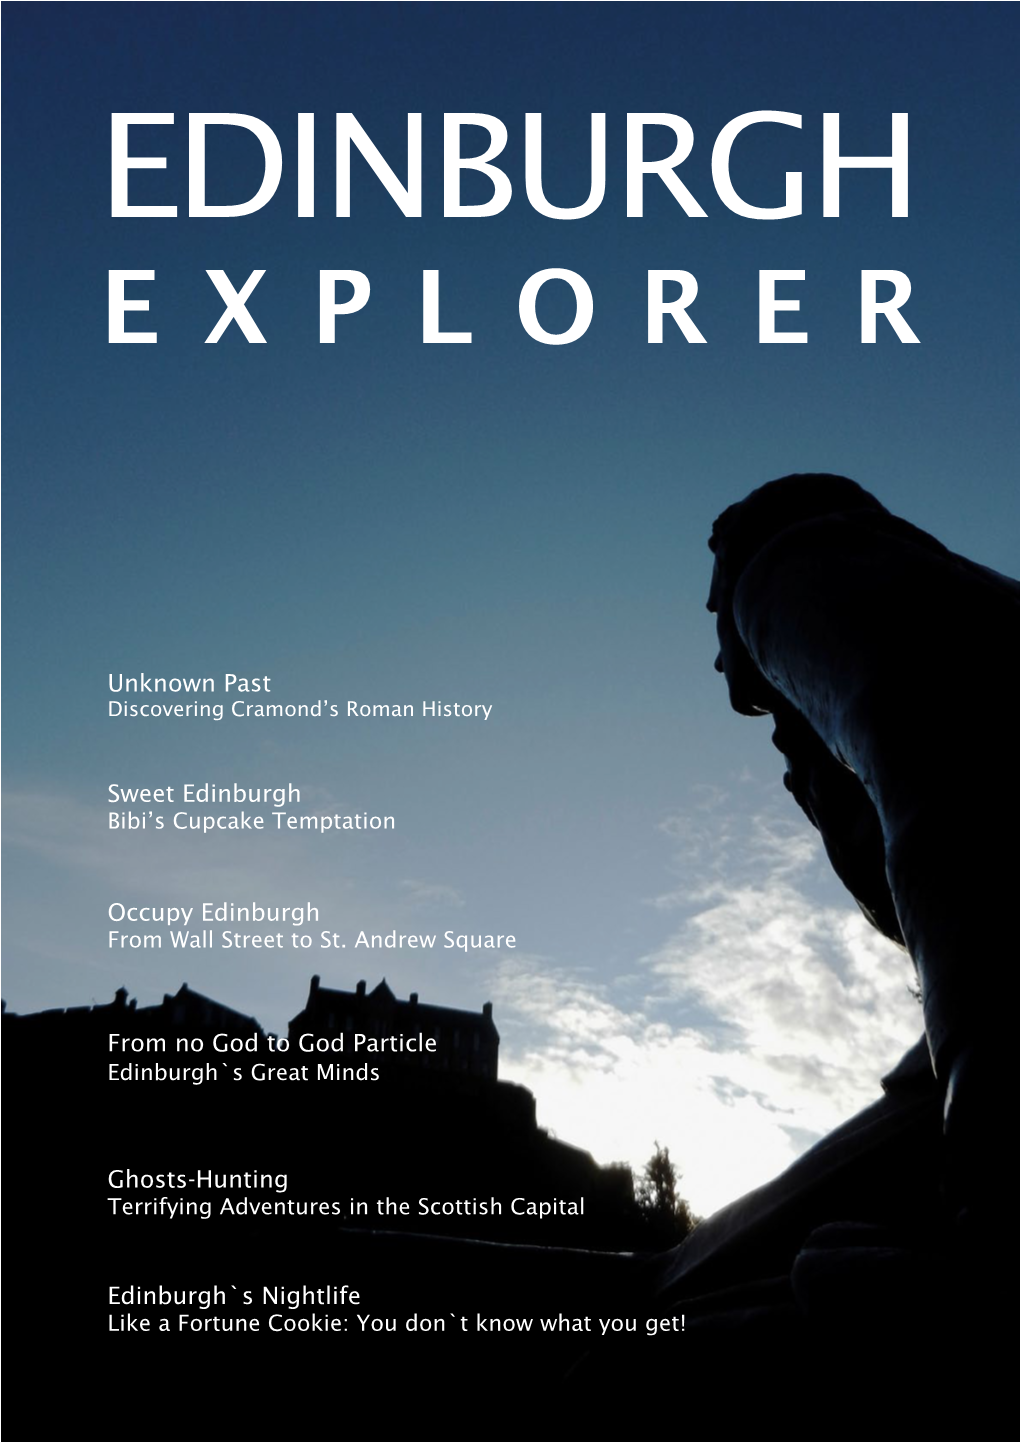 EU Edinburgh Guide, Winter 2011